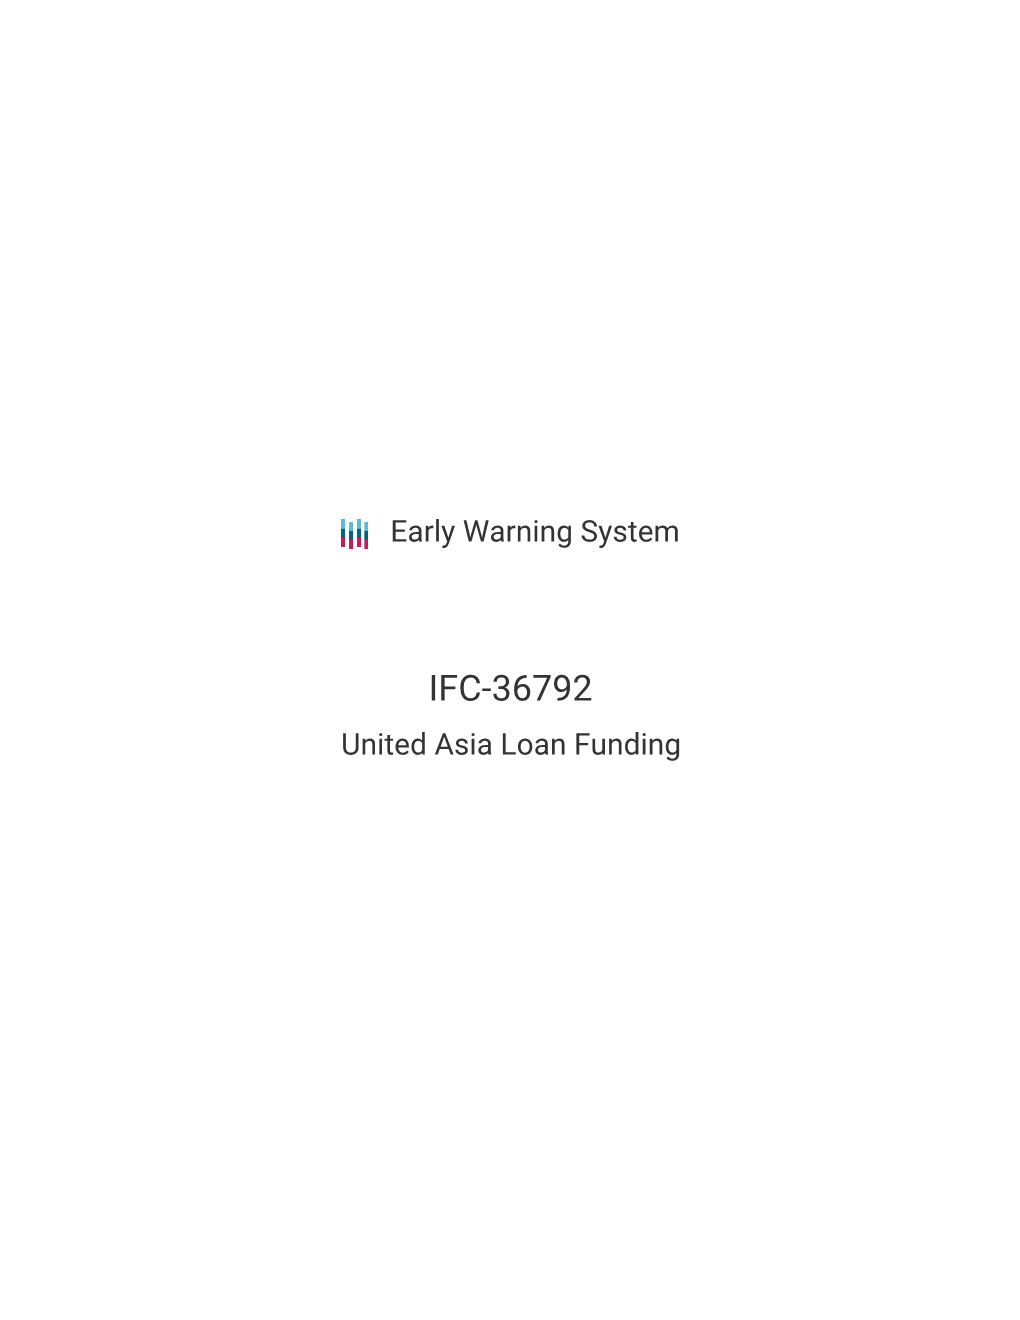 IFC-36792 United Asia Loan Funding Early Warning System IFC-36792 United Asia Loan Funding